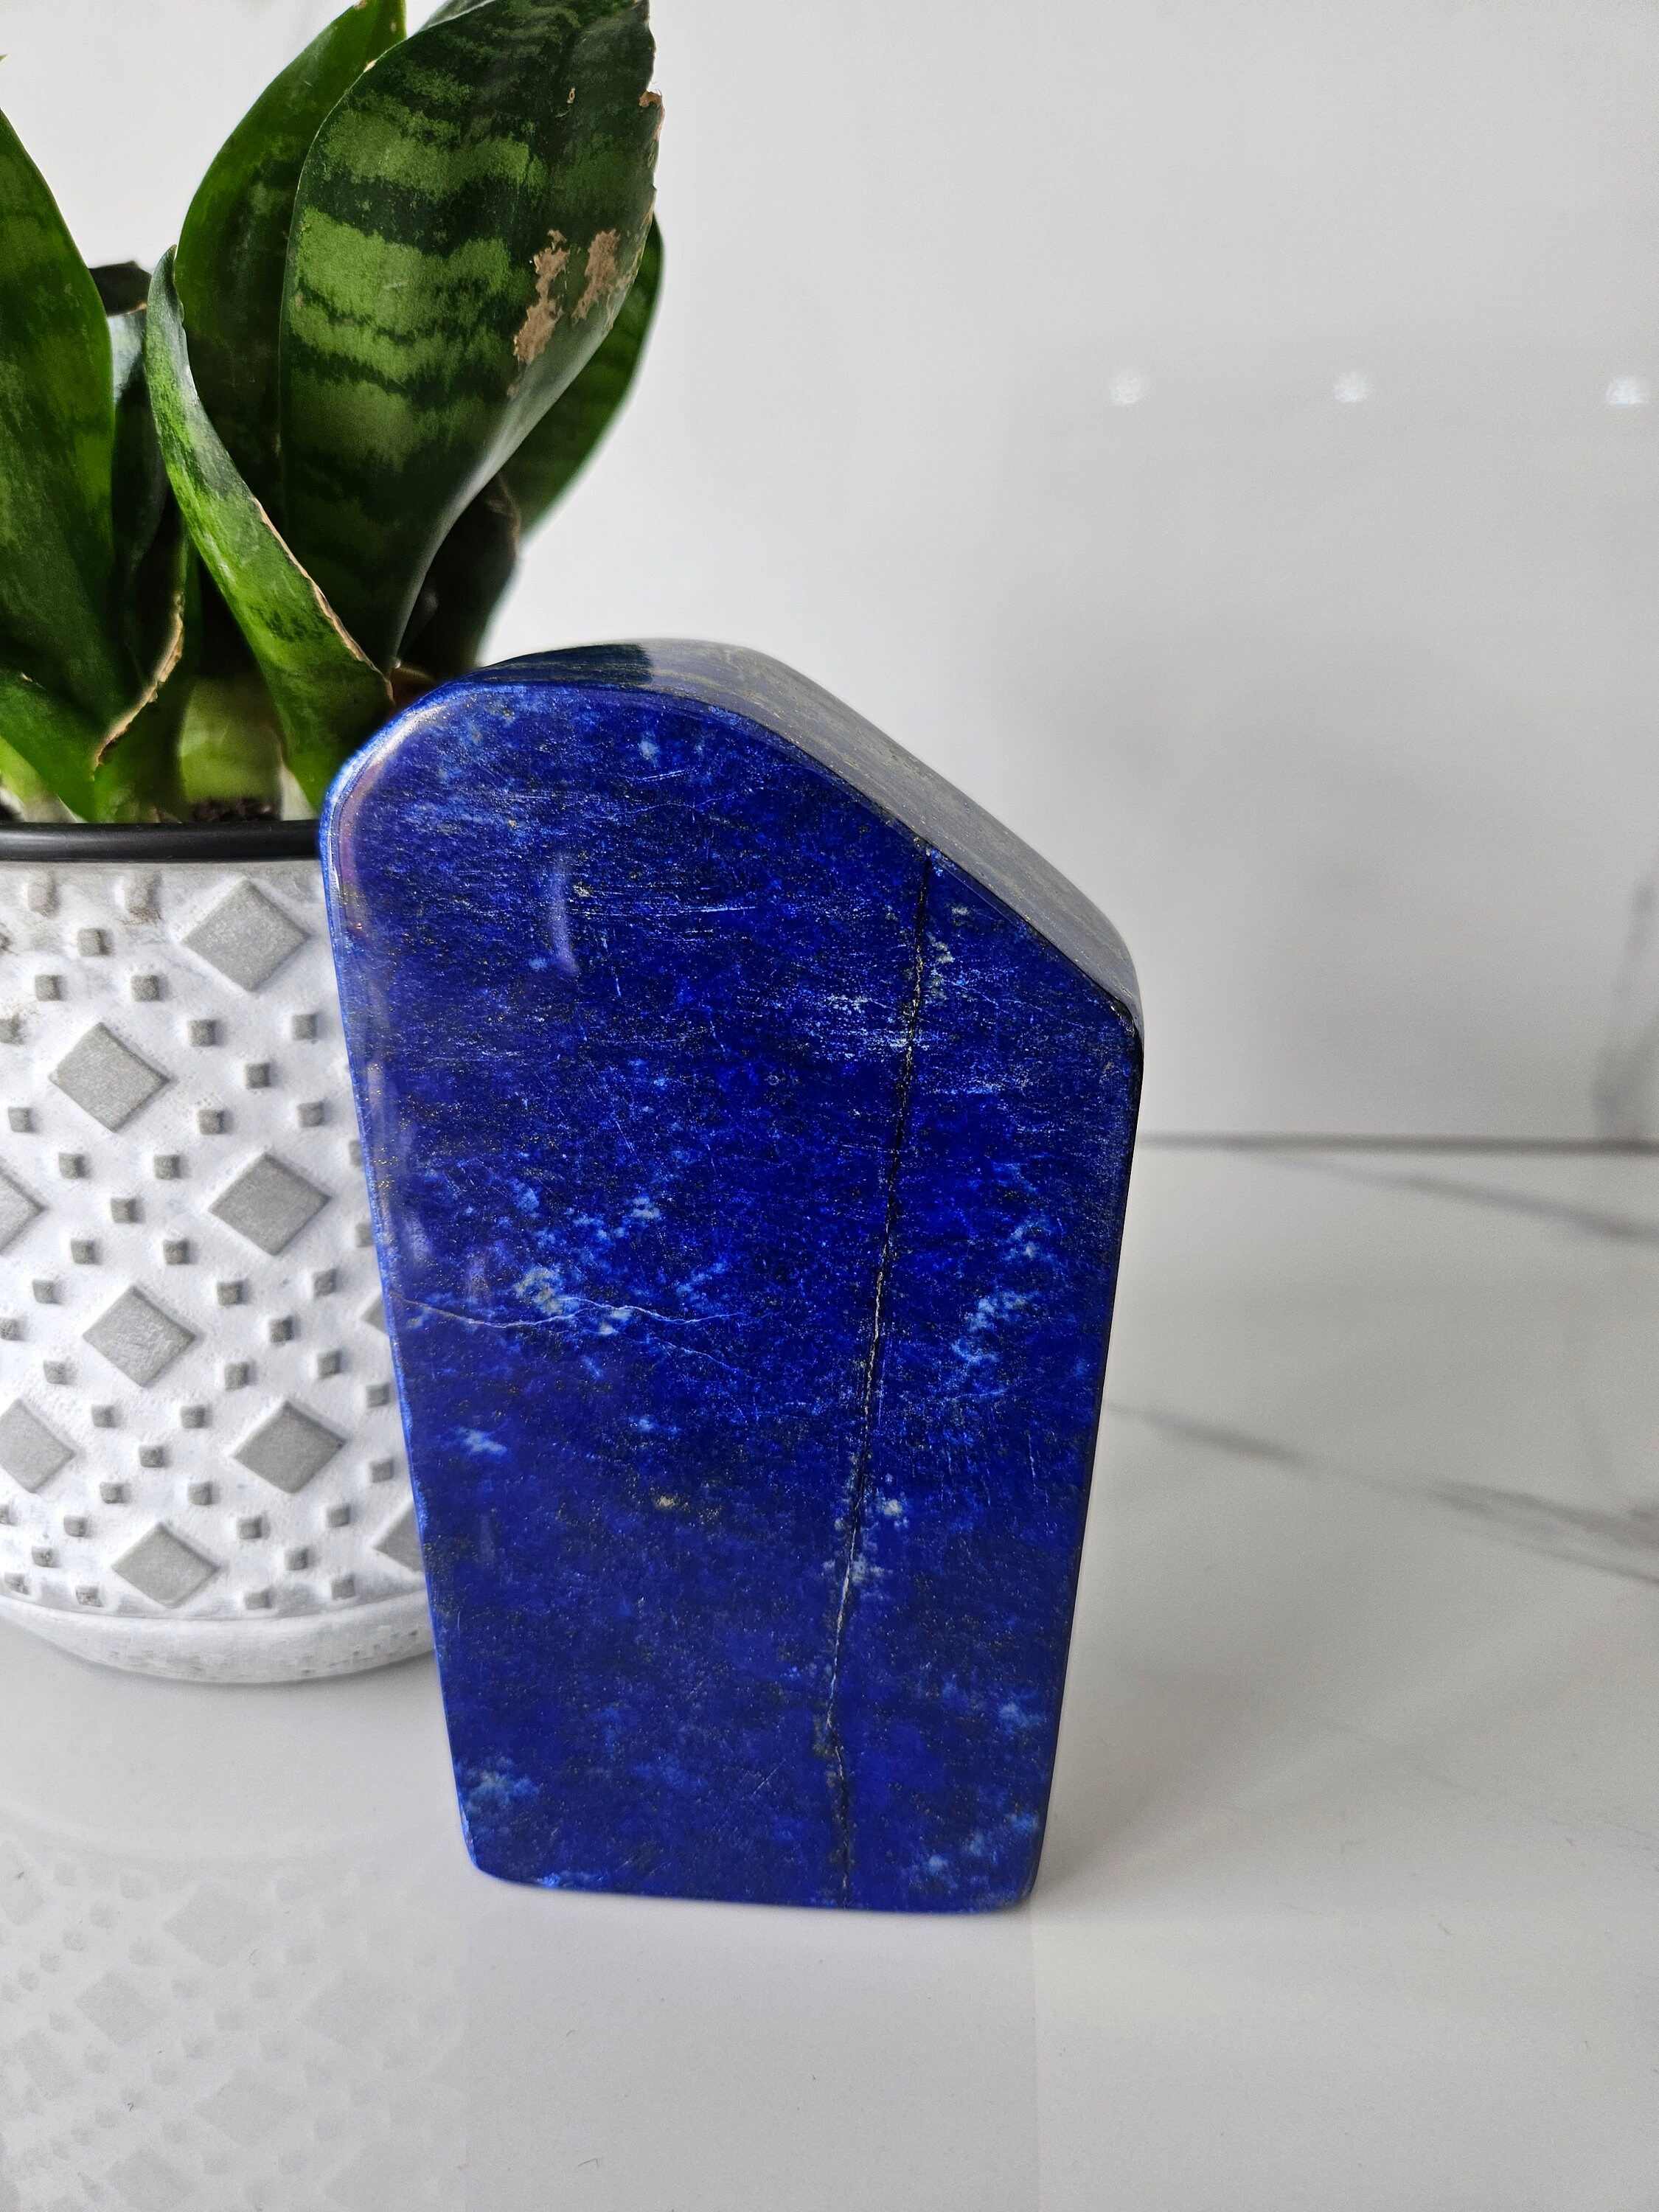 Free Form A++ Lapis Lazuli, home decor, chunky stone, Love, peace, Healing Crystal, Confidence, Metaphysical stone, Lapis lazuli, Polished